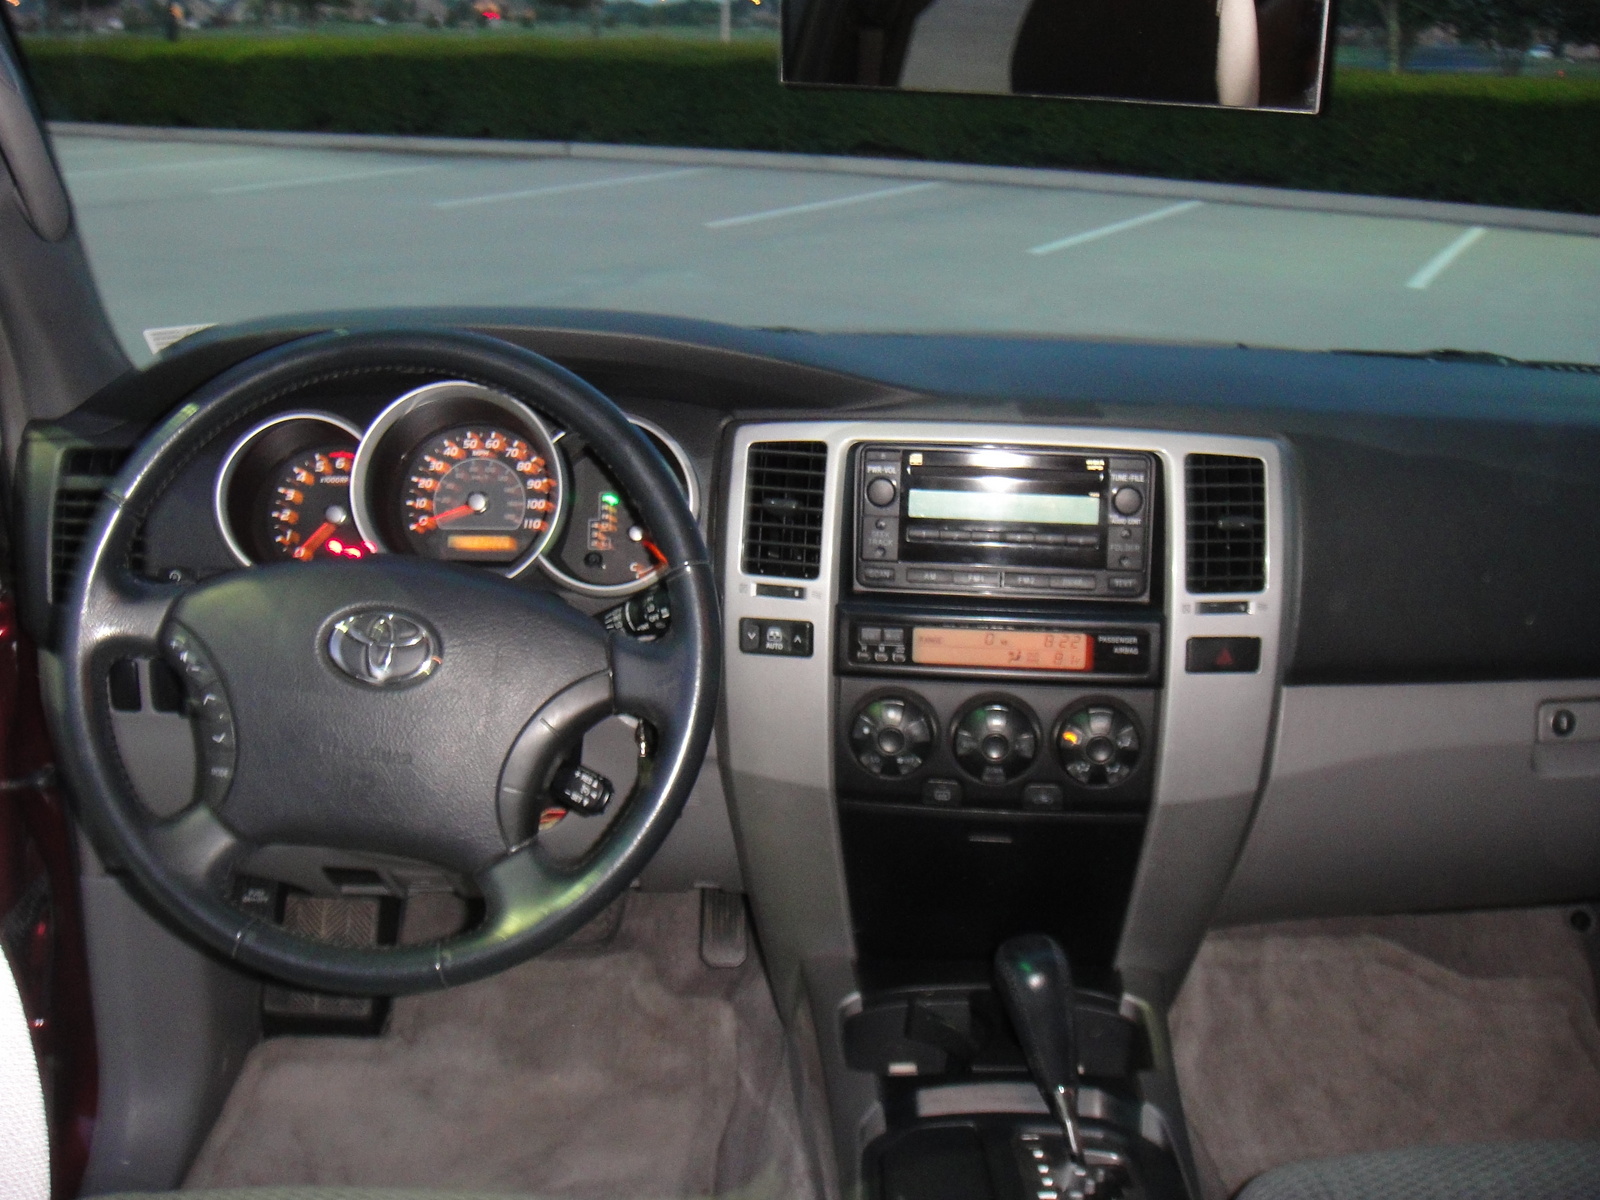 2006 Toyota 4runner interior